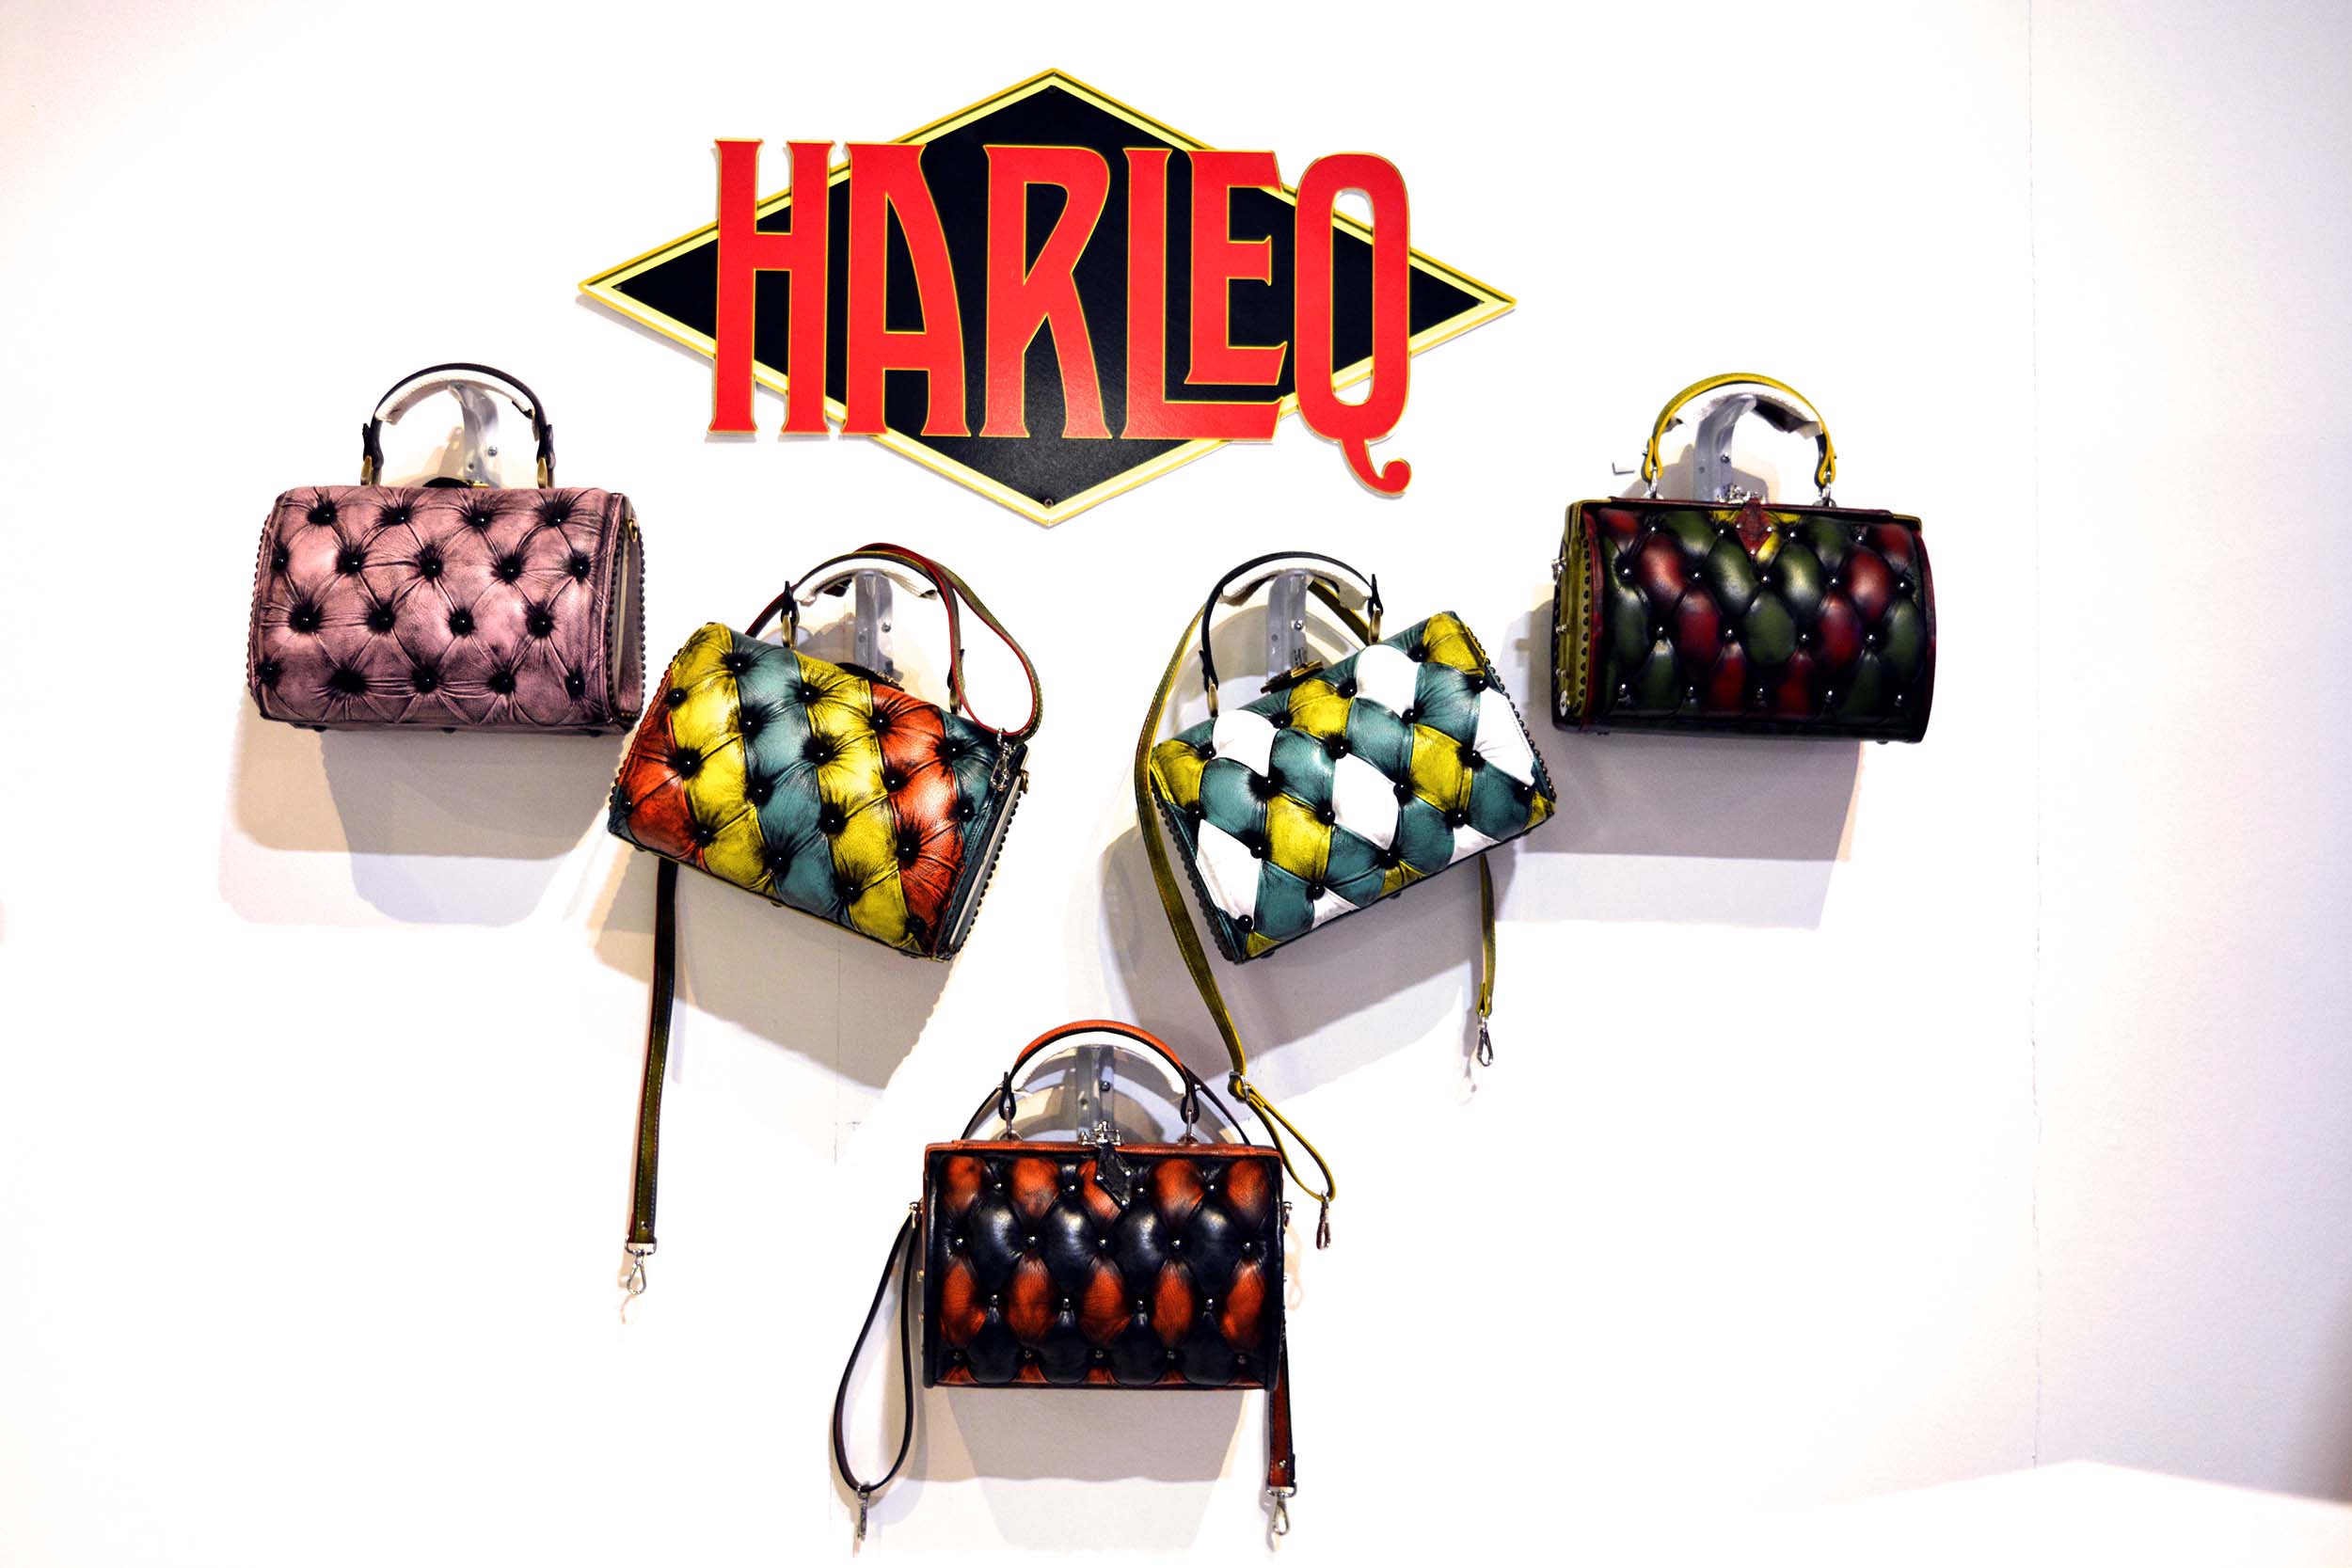 harleq-bags-trunk-vintage-luxury-leathers2018